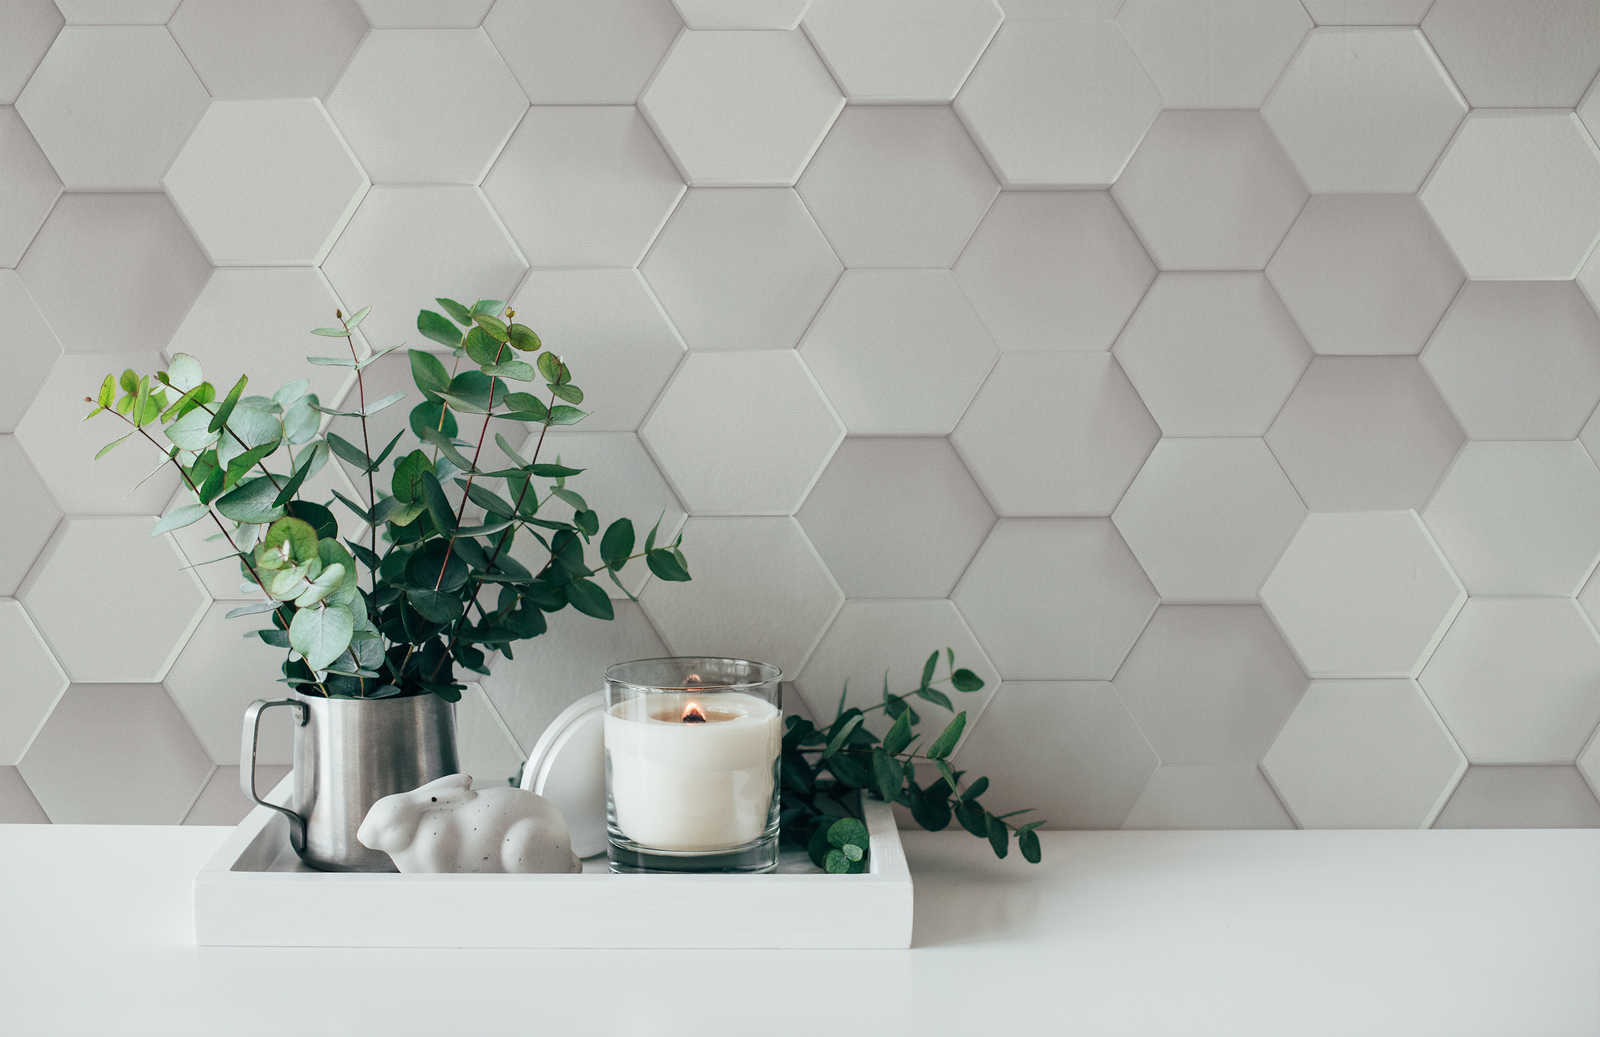             Hexagon 3D wallpaper graphic pattern honeycomb - white
        